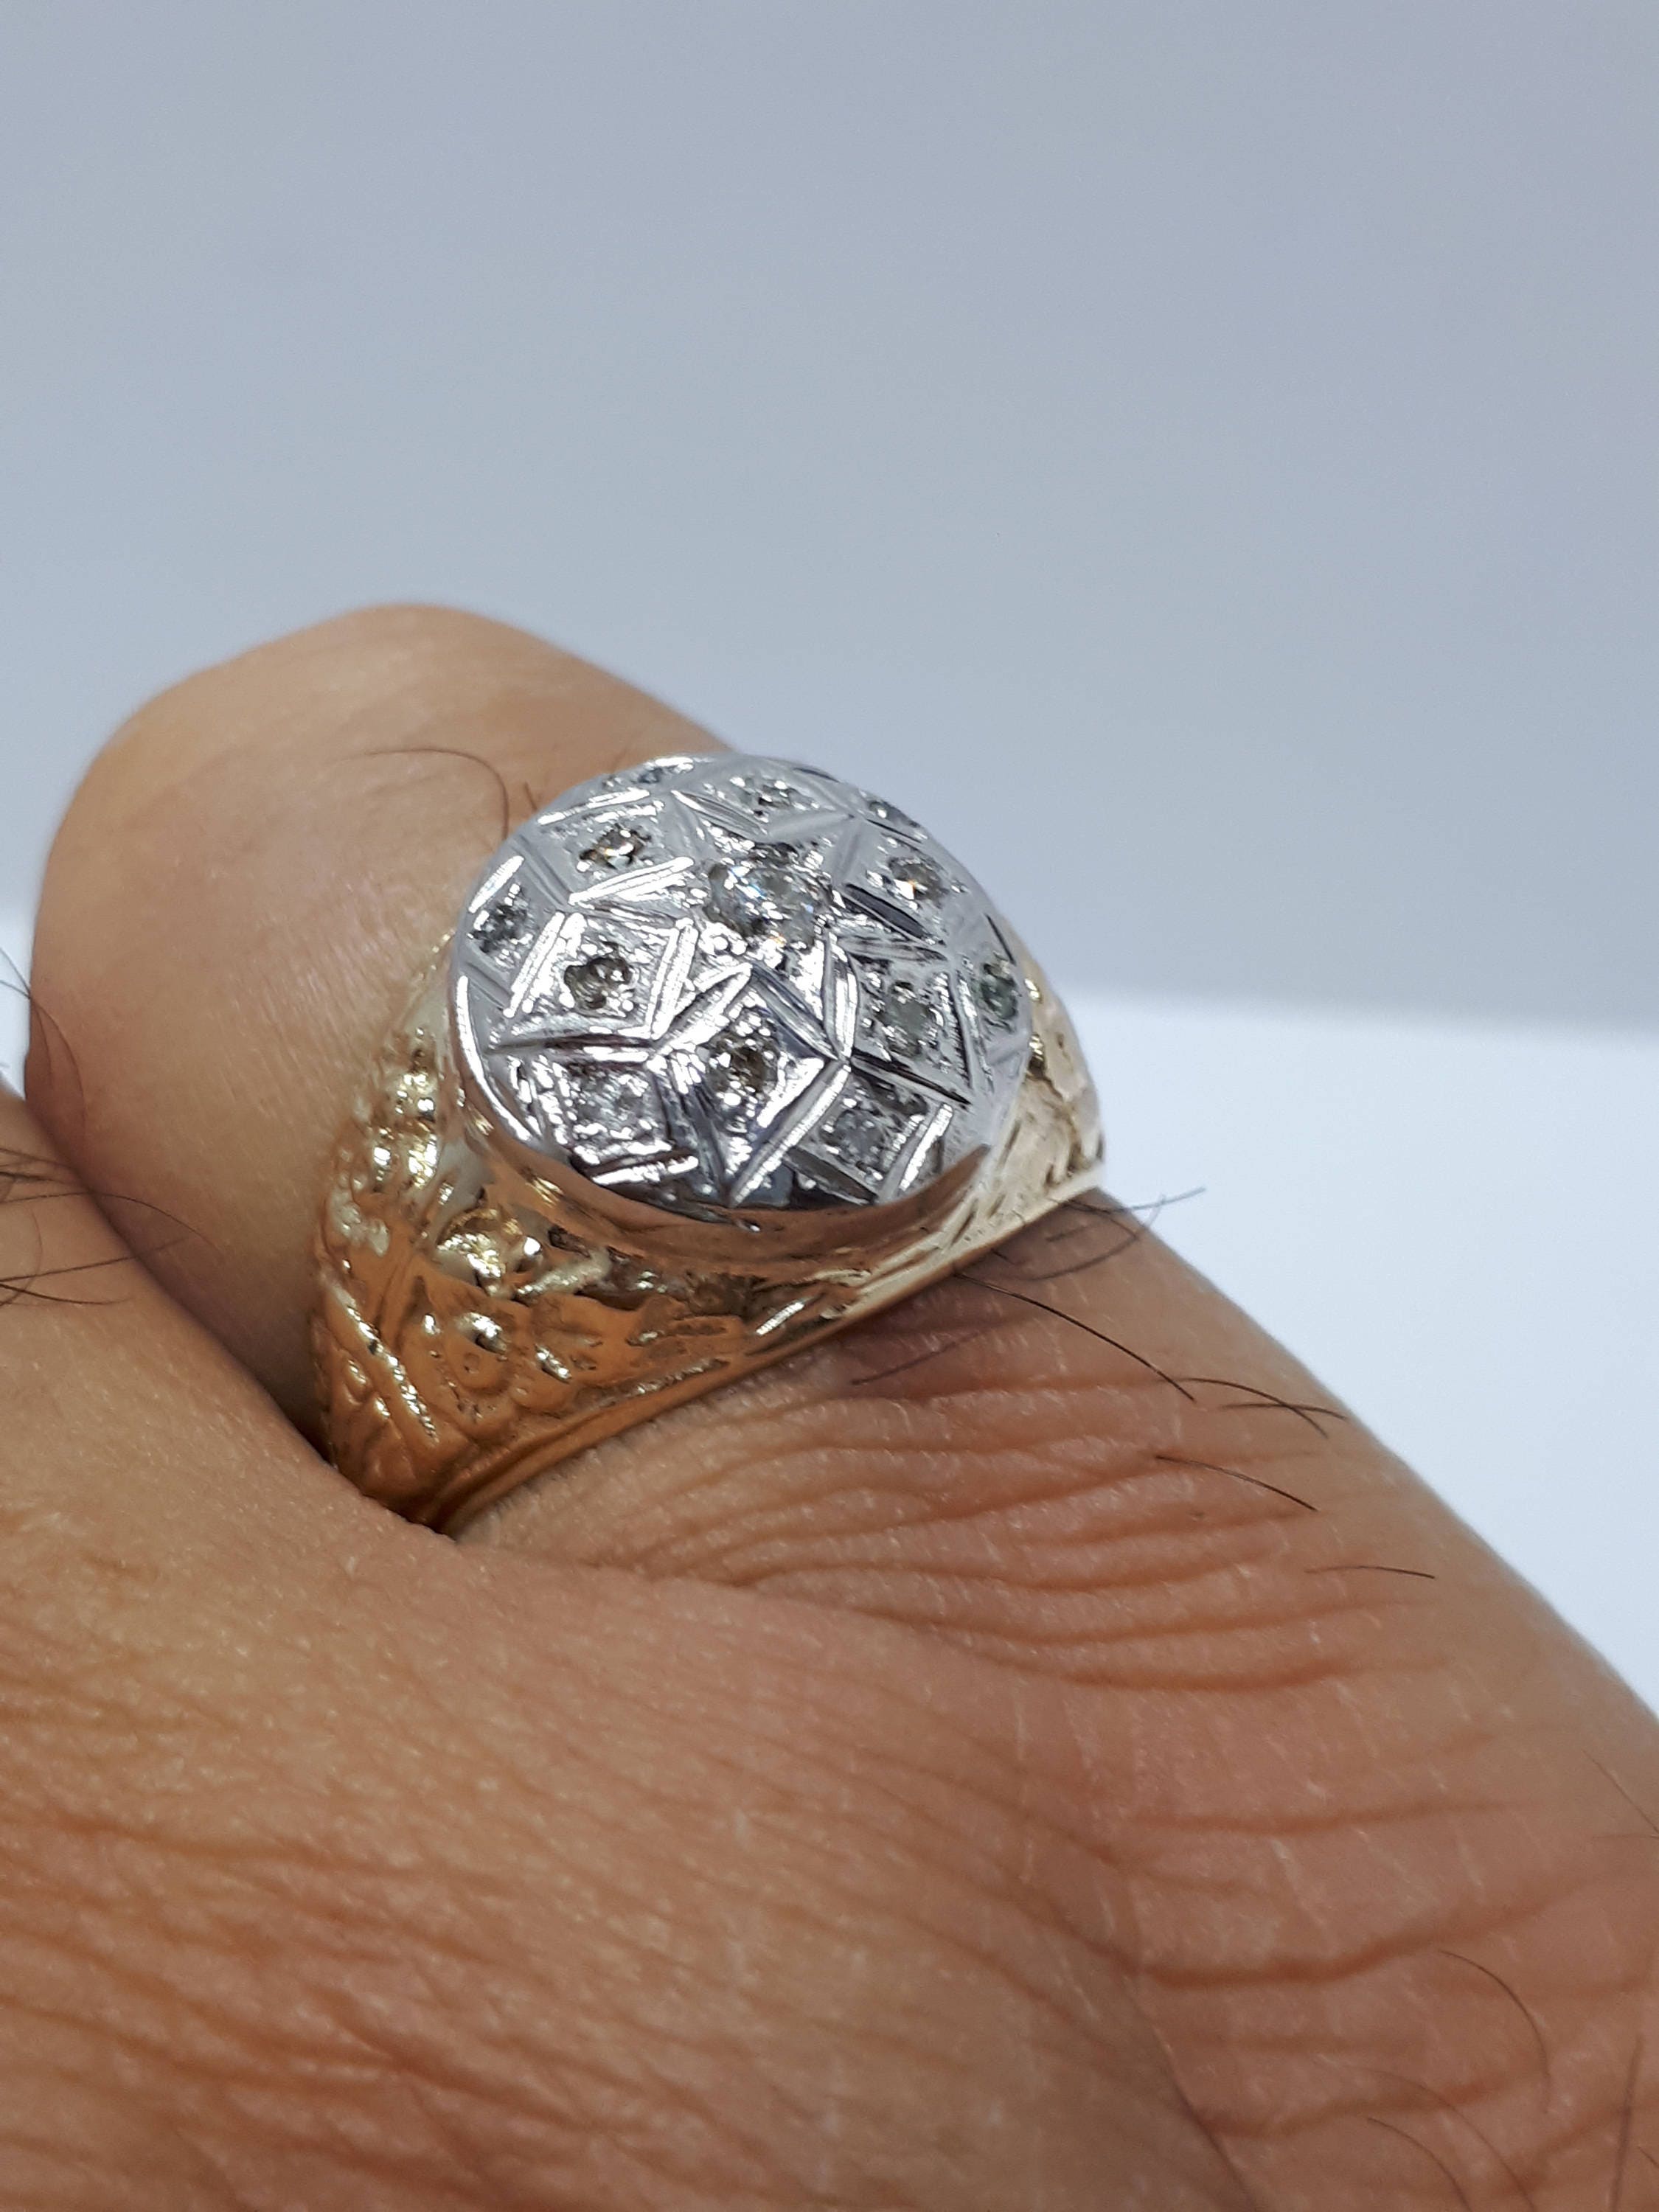 1 Gram Gold Forming Ganpati Dainty Design Best Quality Ring For Men - Style  B012 at Rs 2250.00 | सोने की अंगूठी - Soni Fashion, Rajkot | ID:  2849618196955